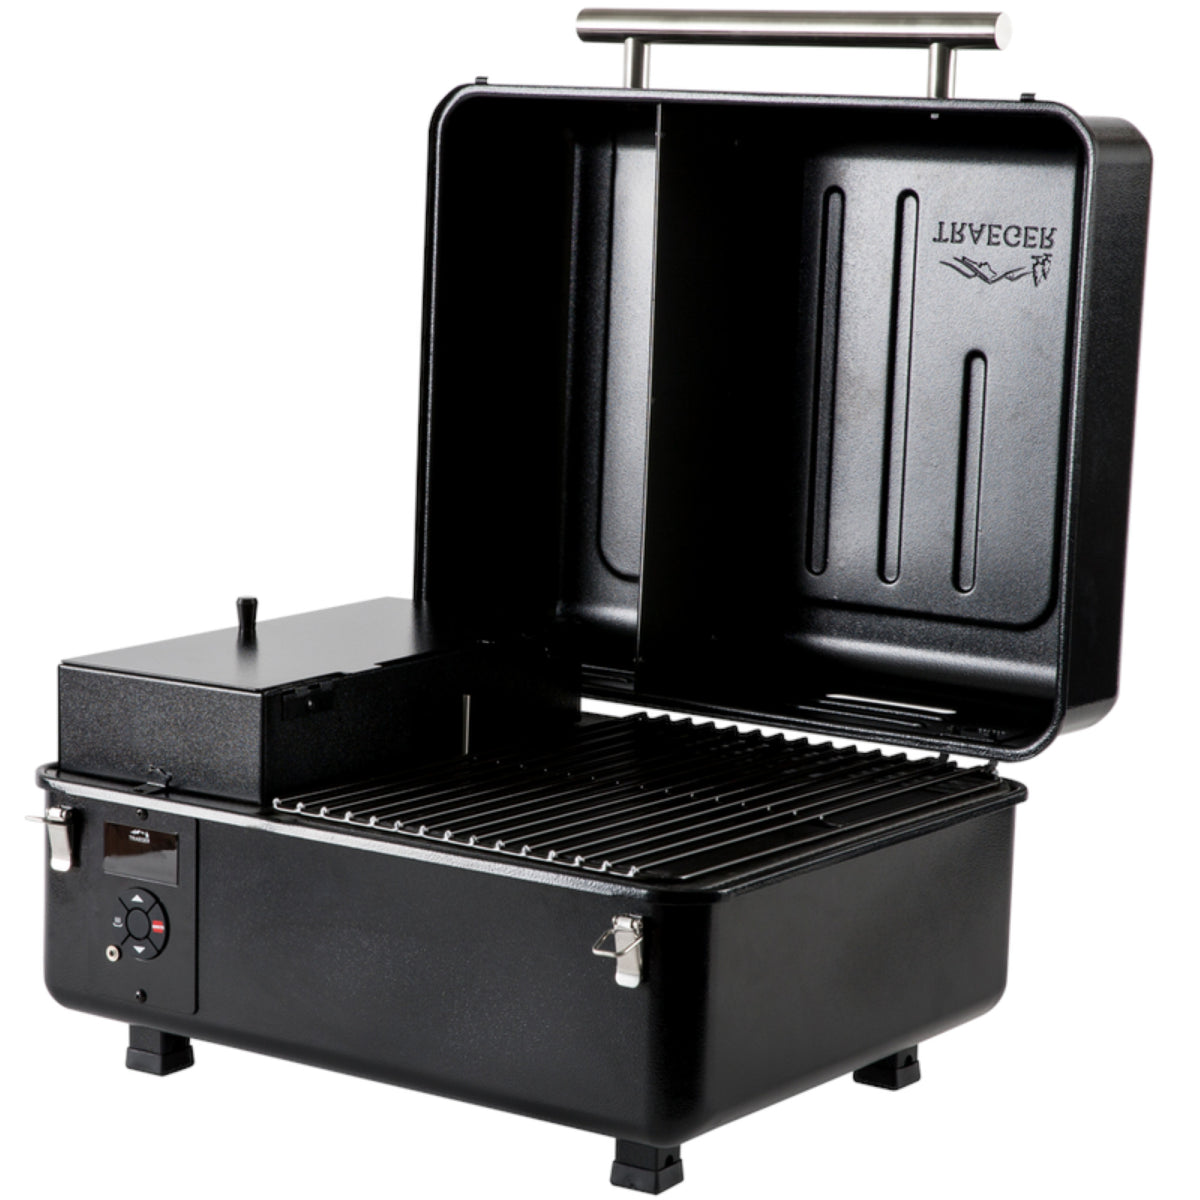 Traeger Ranger Barbecue portatile a Pellet - Comodissimo e arriva a temperatura in un attimo!